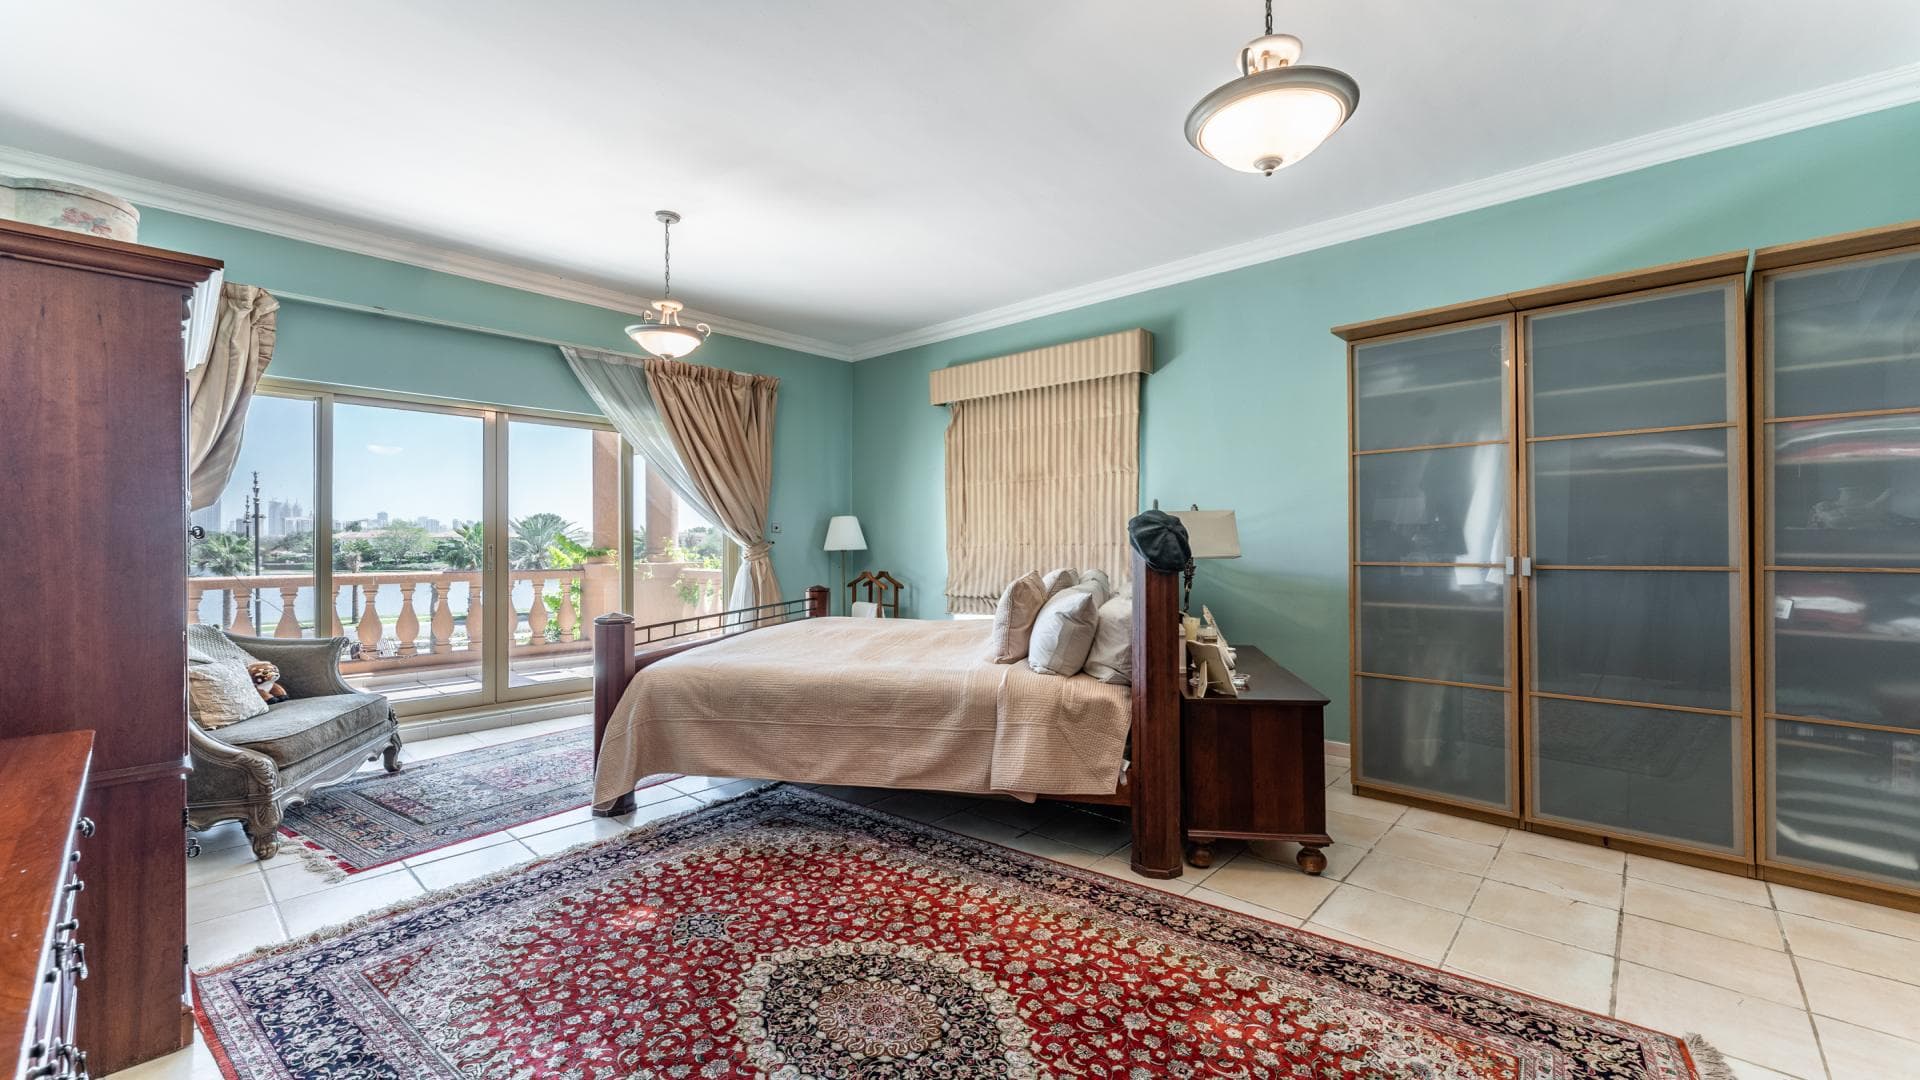 4 Bedroom Villa For Sale Mediterranean Clusters Lp37075 2864a9add10b2e00.jpg